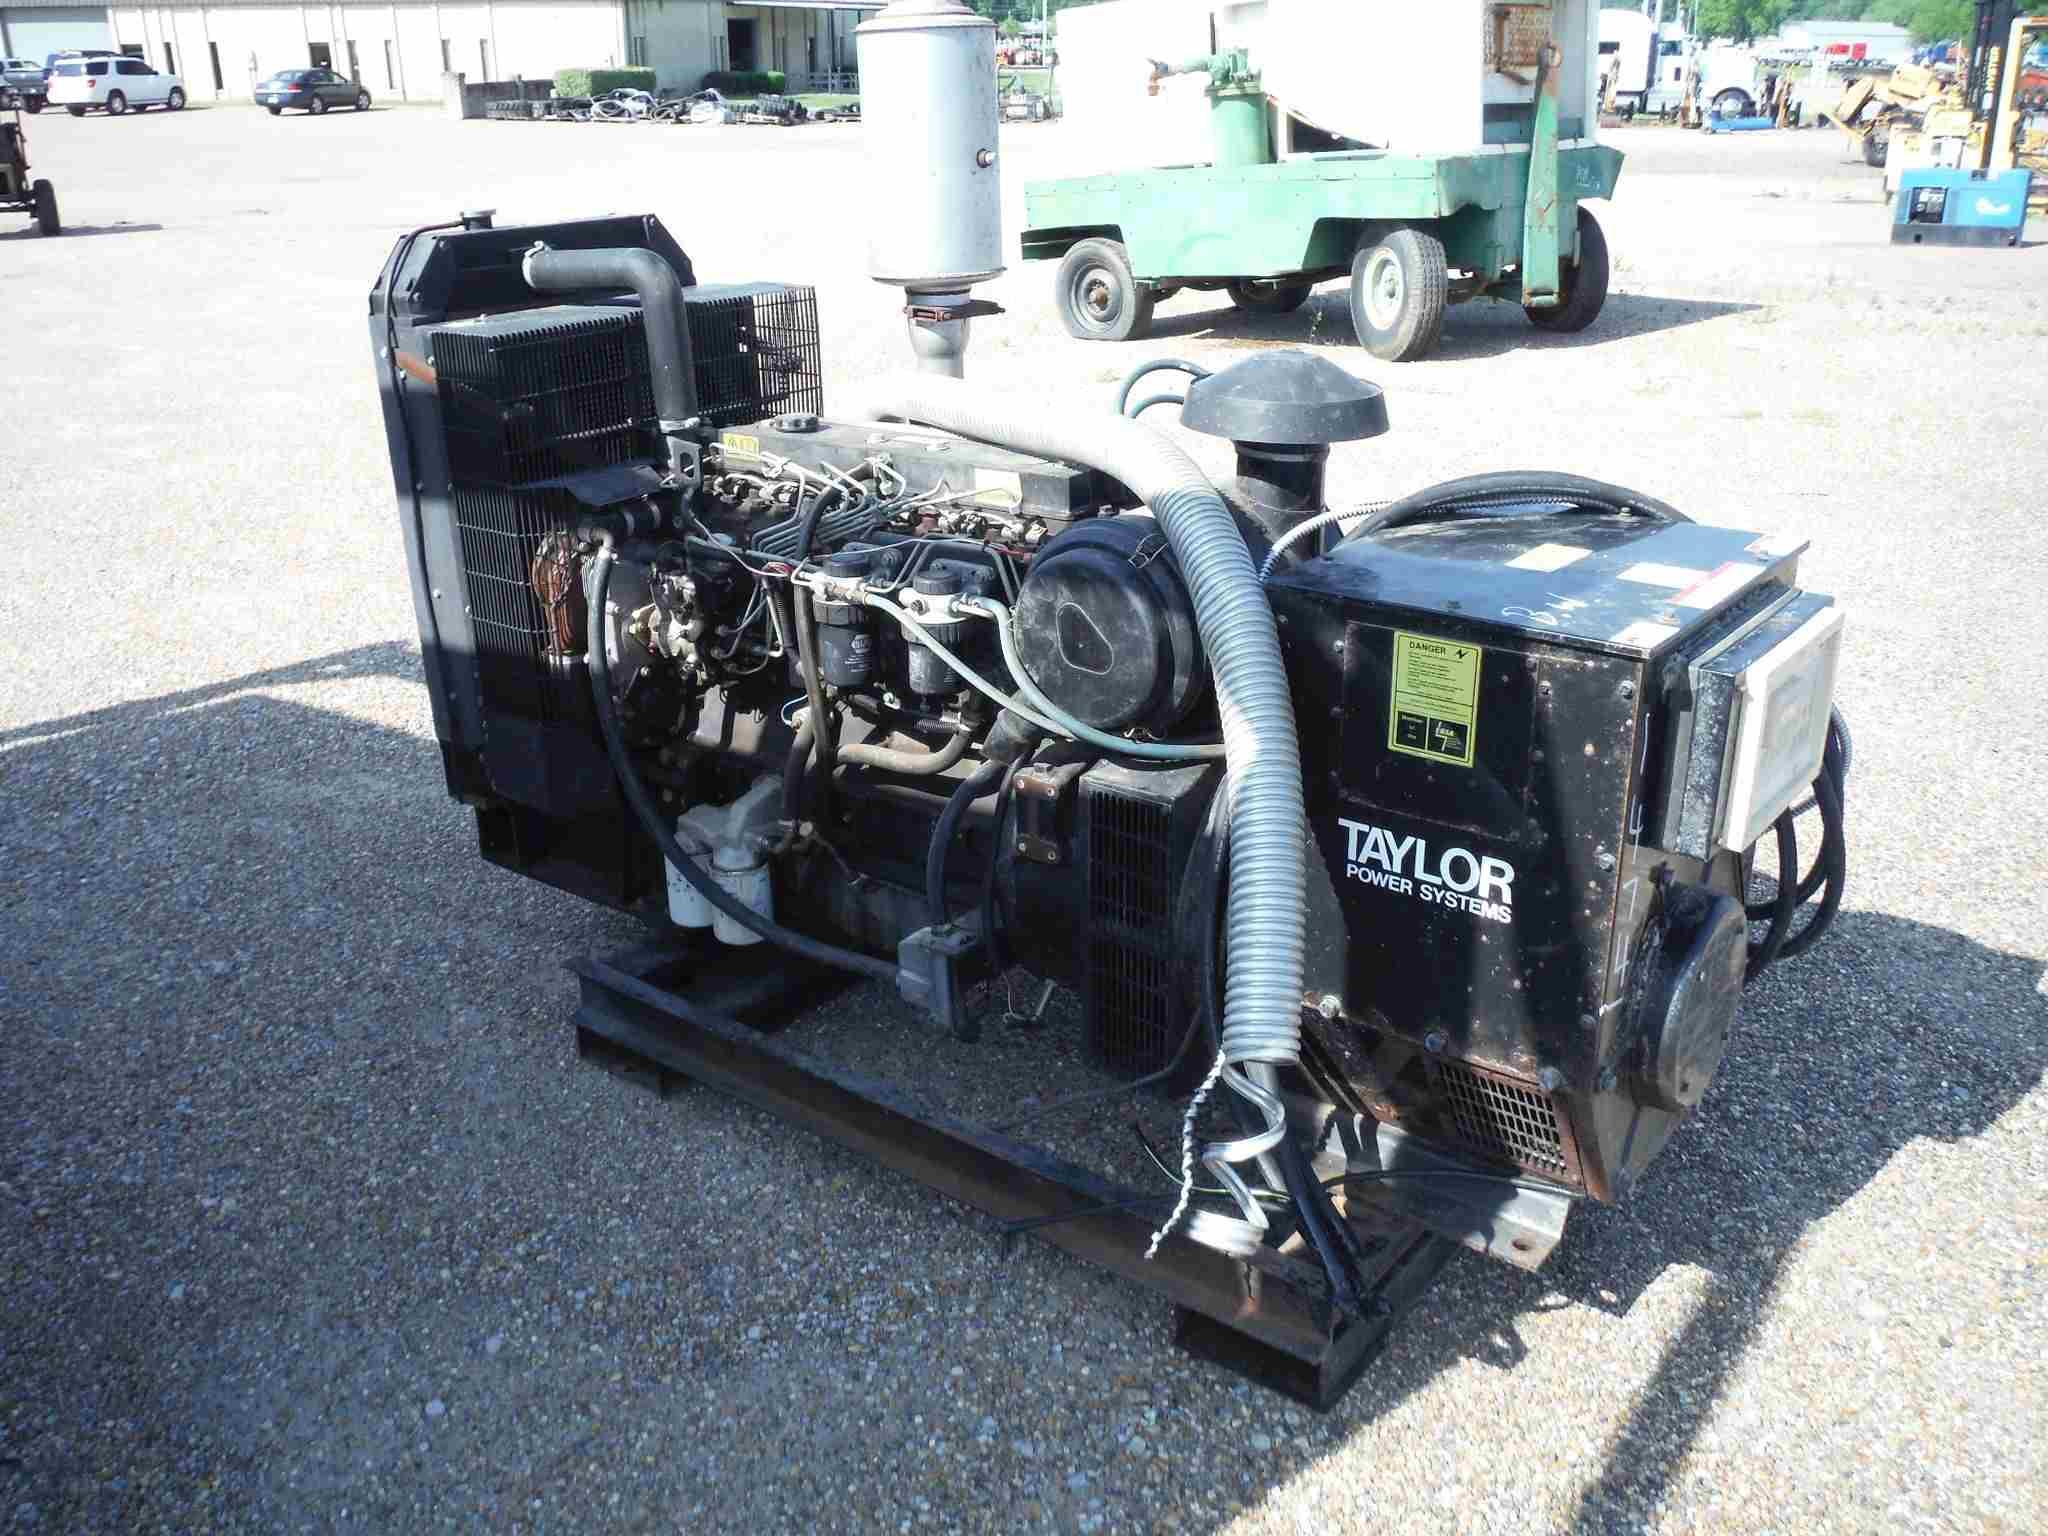 Taylor 108KW Generator, s/n 17238: Model P108CD1, Single Phase, Perkins 6-c